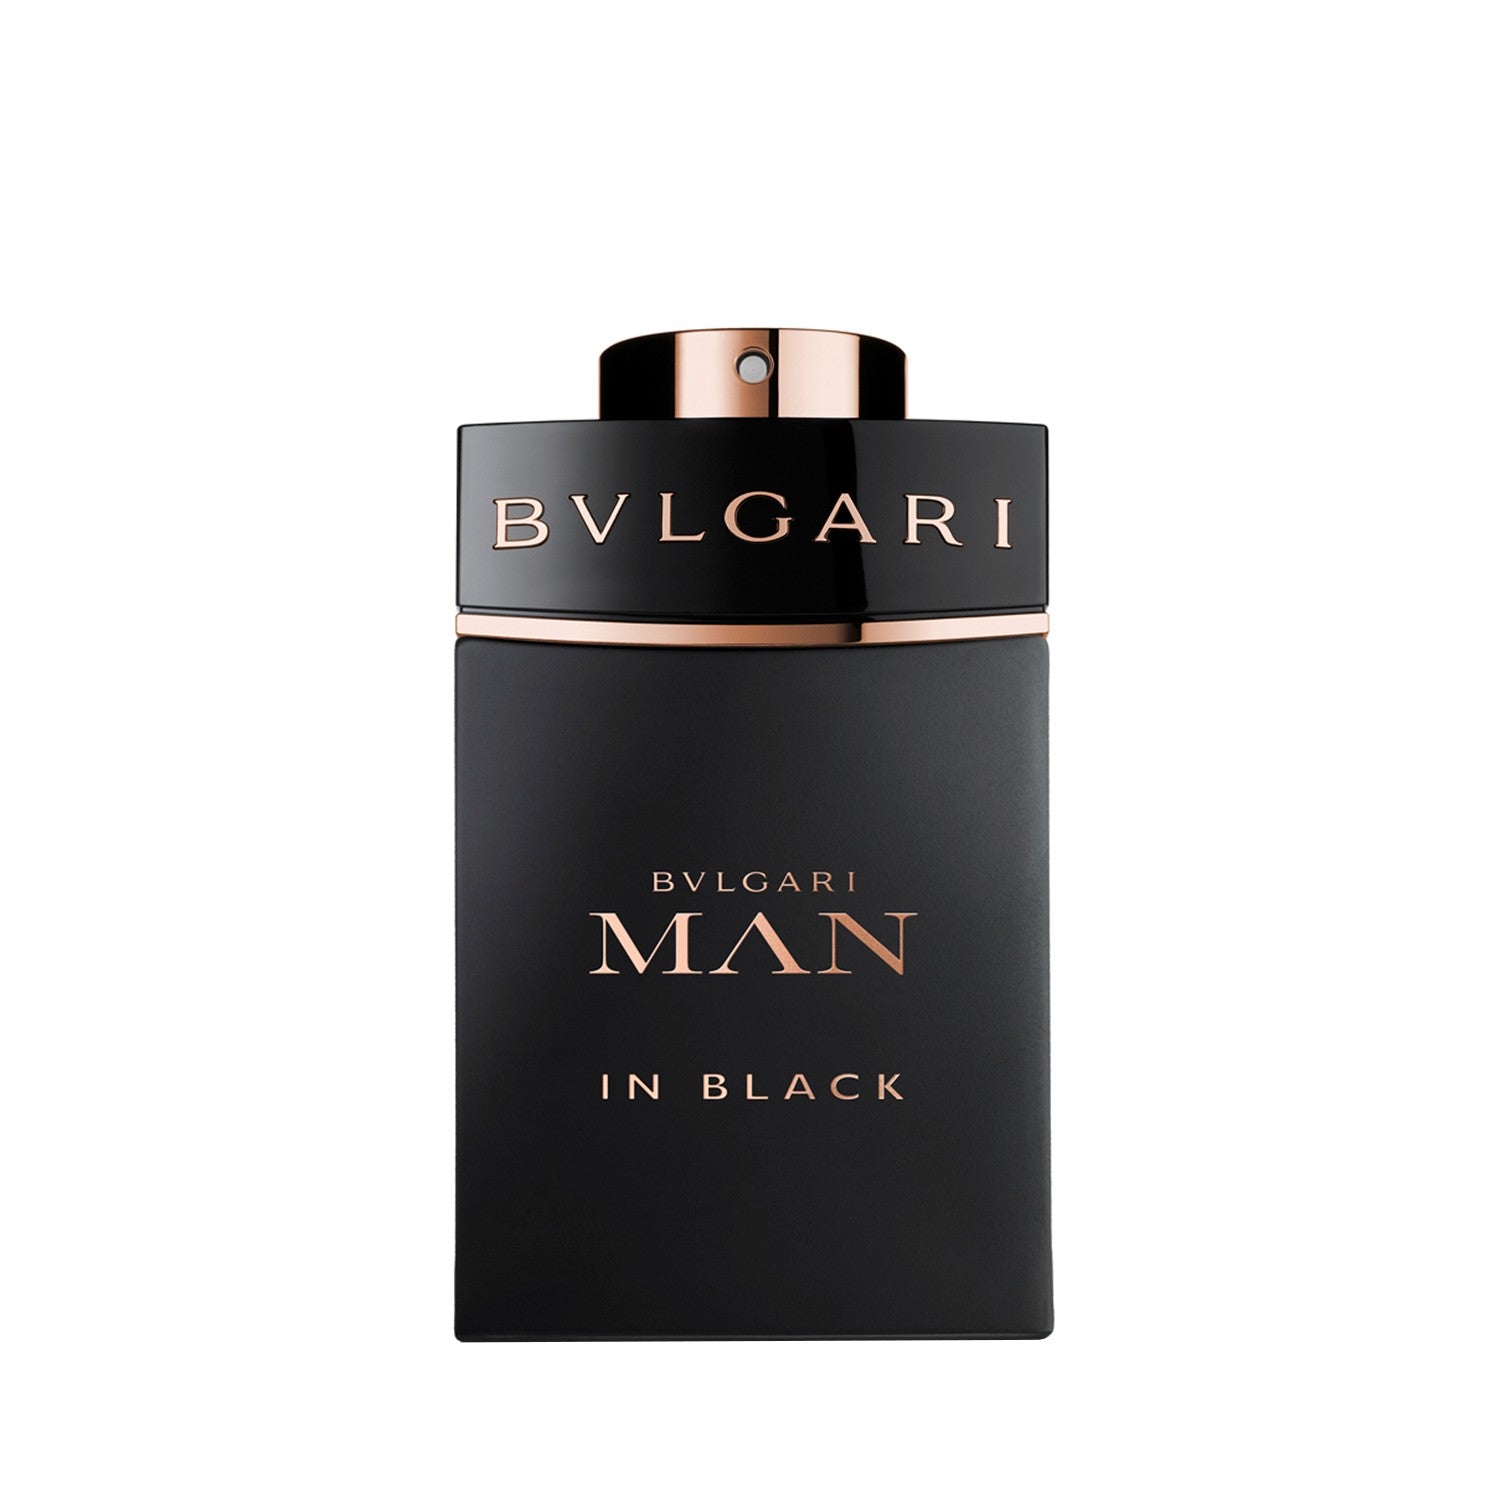 Bulgari Man in Black Eau de Parfum 100 ml Tester - RossoLaccaStore